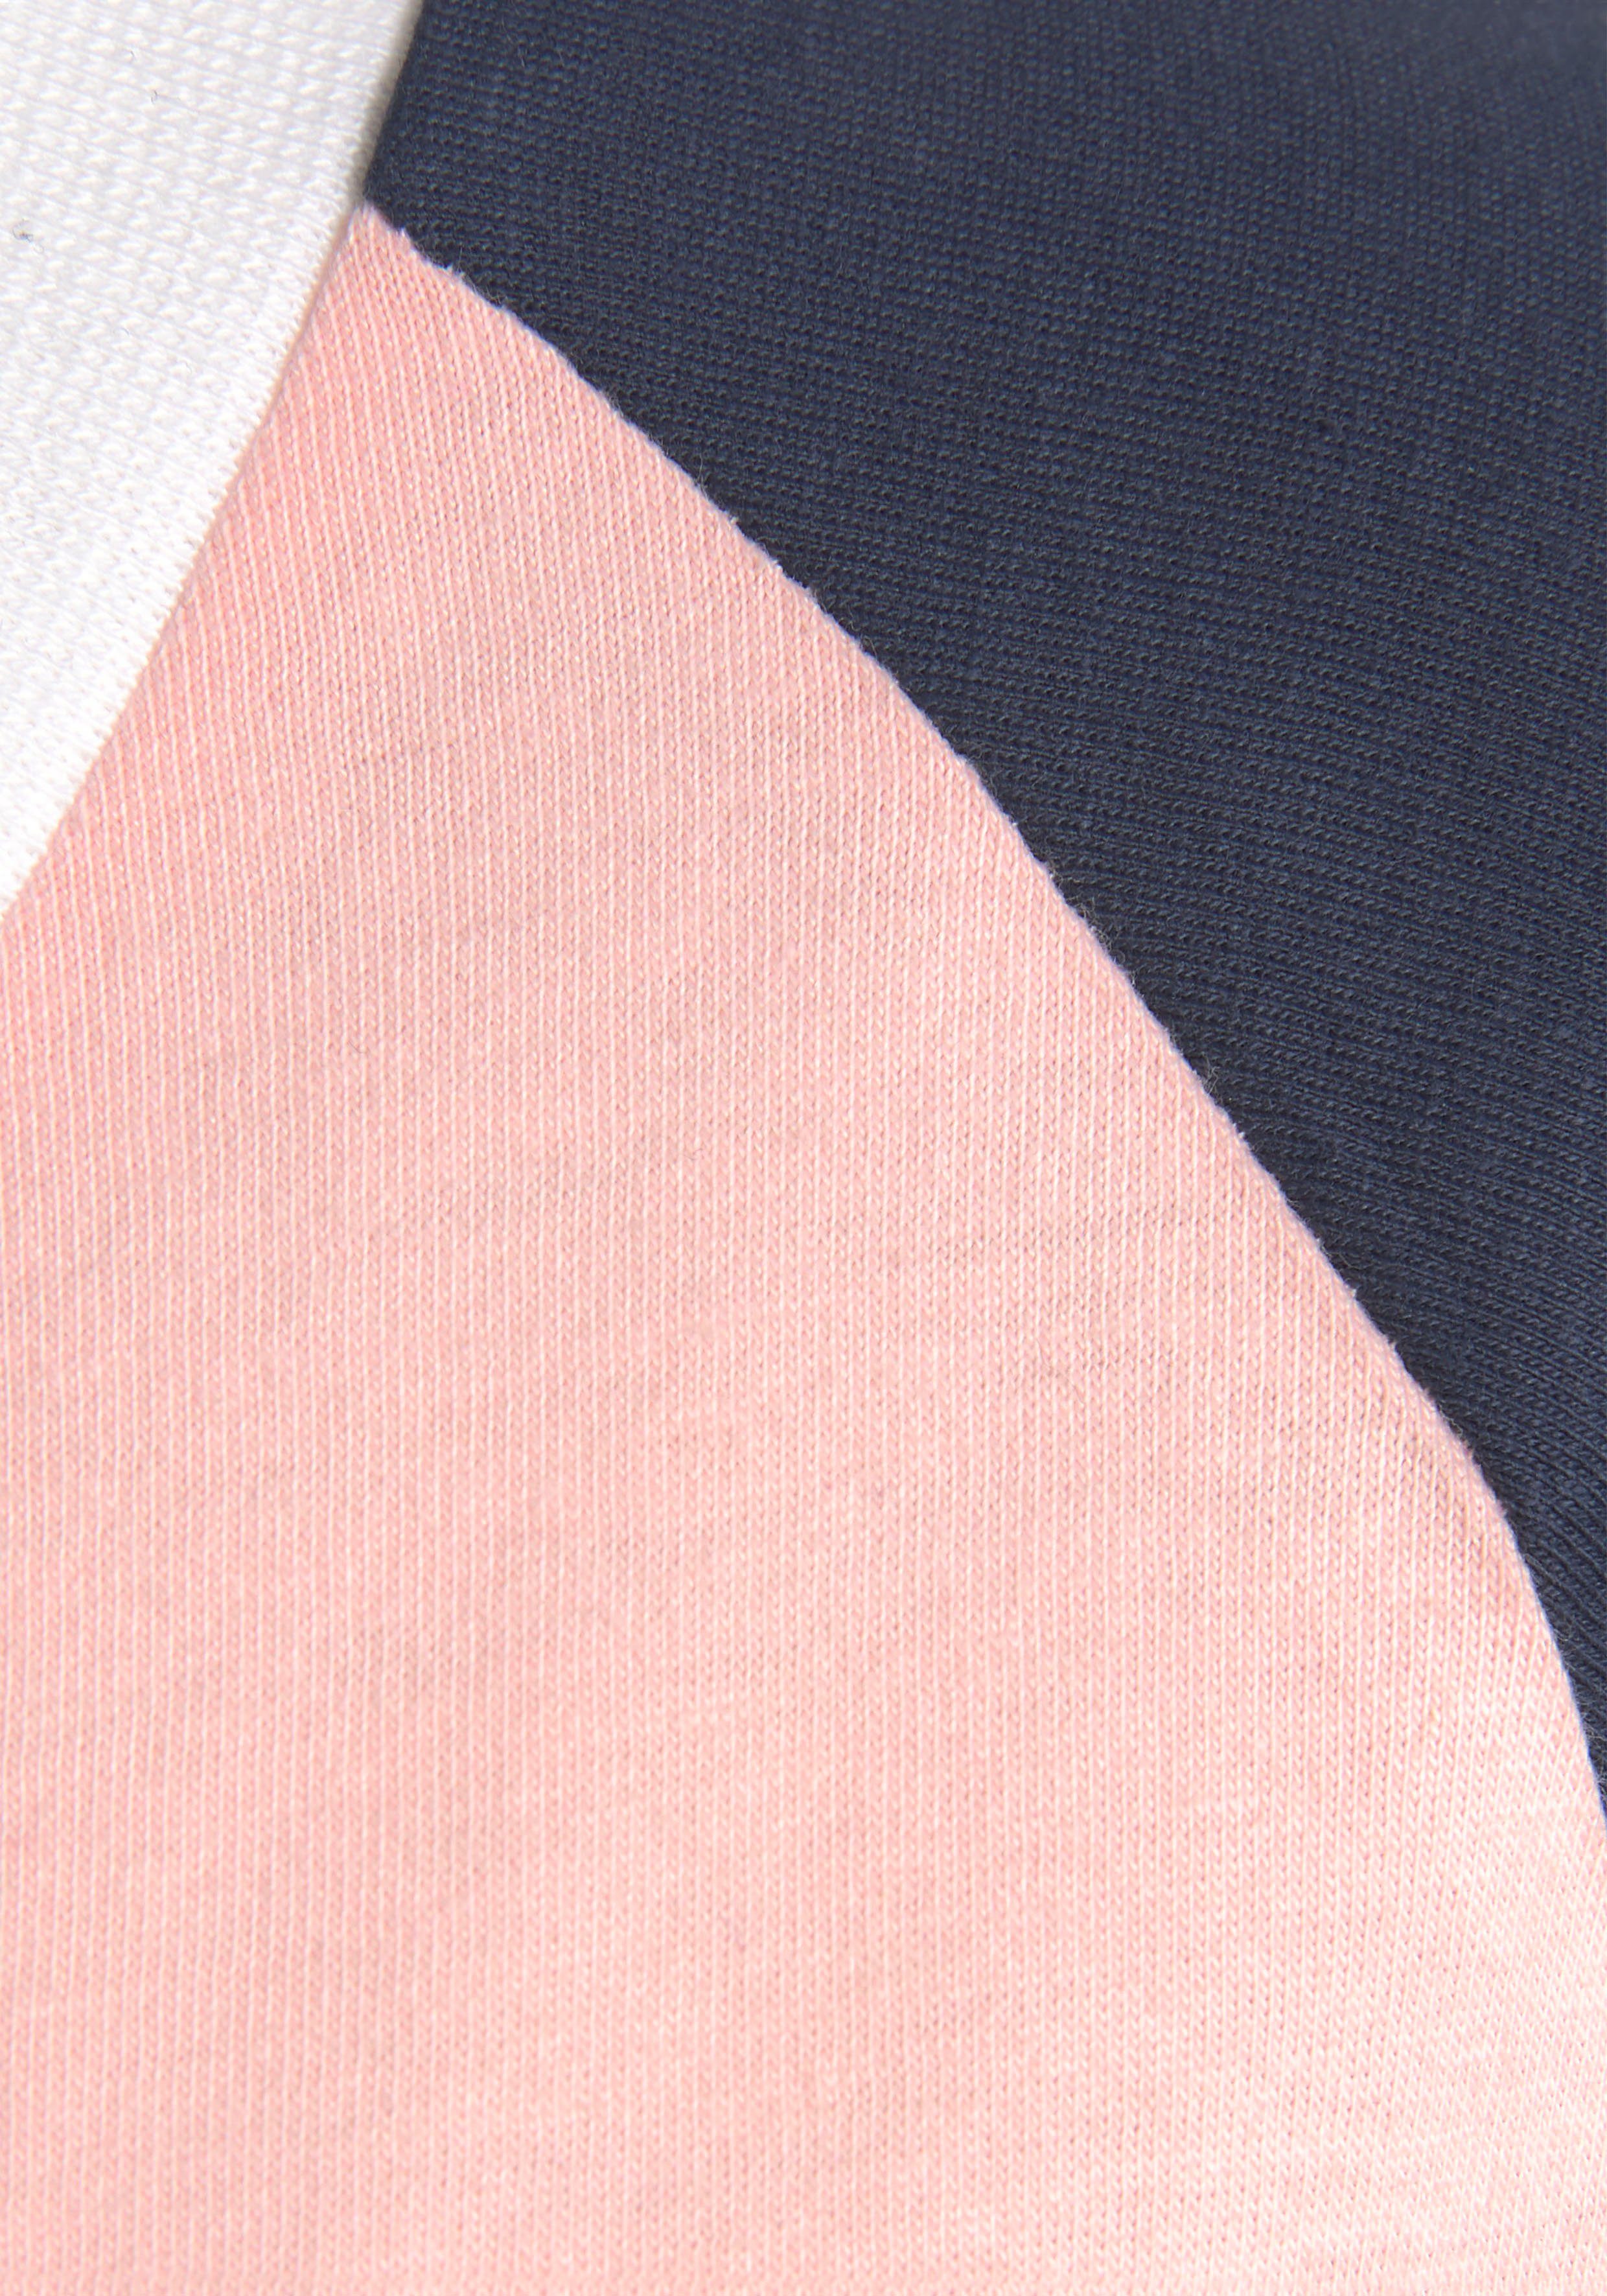 tlg., Raglanärmeln Stück) (2 rosa-dunkelblau KangaROOS Pyjama mit kontrastfarbenen 1